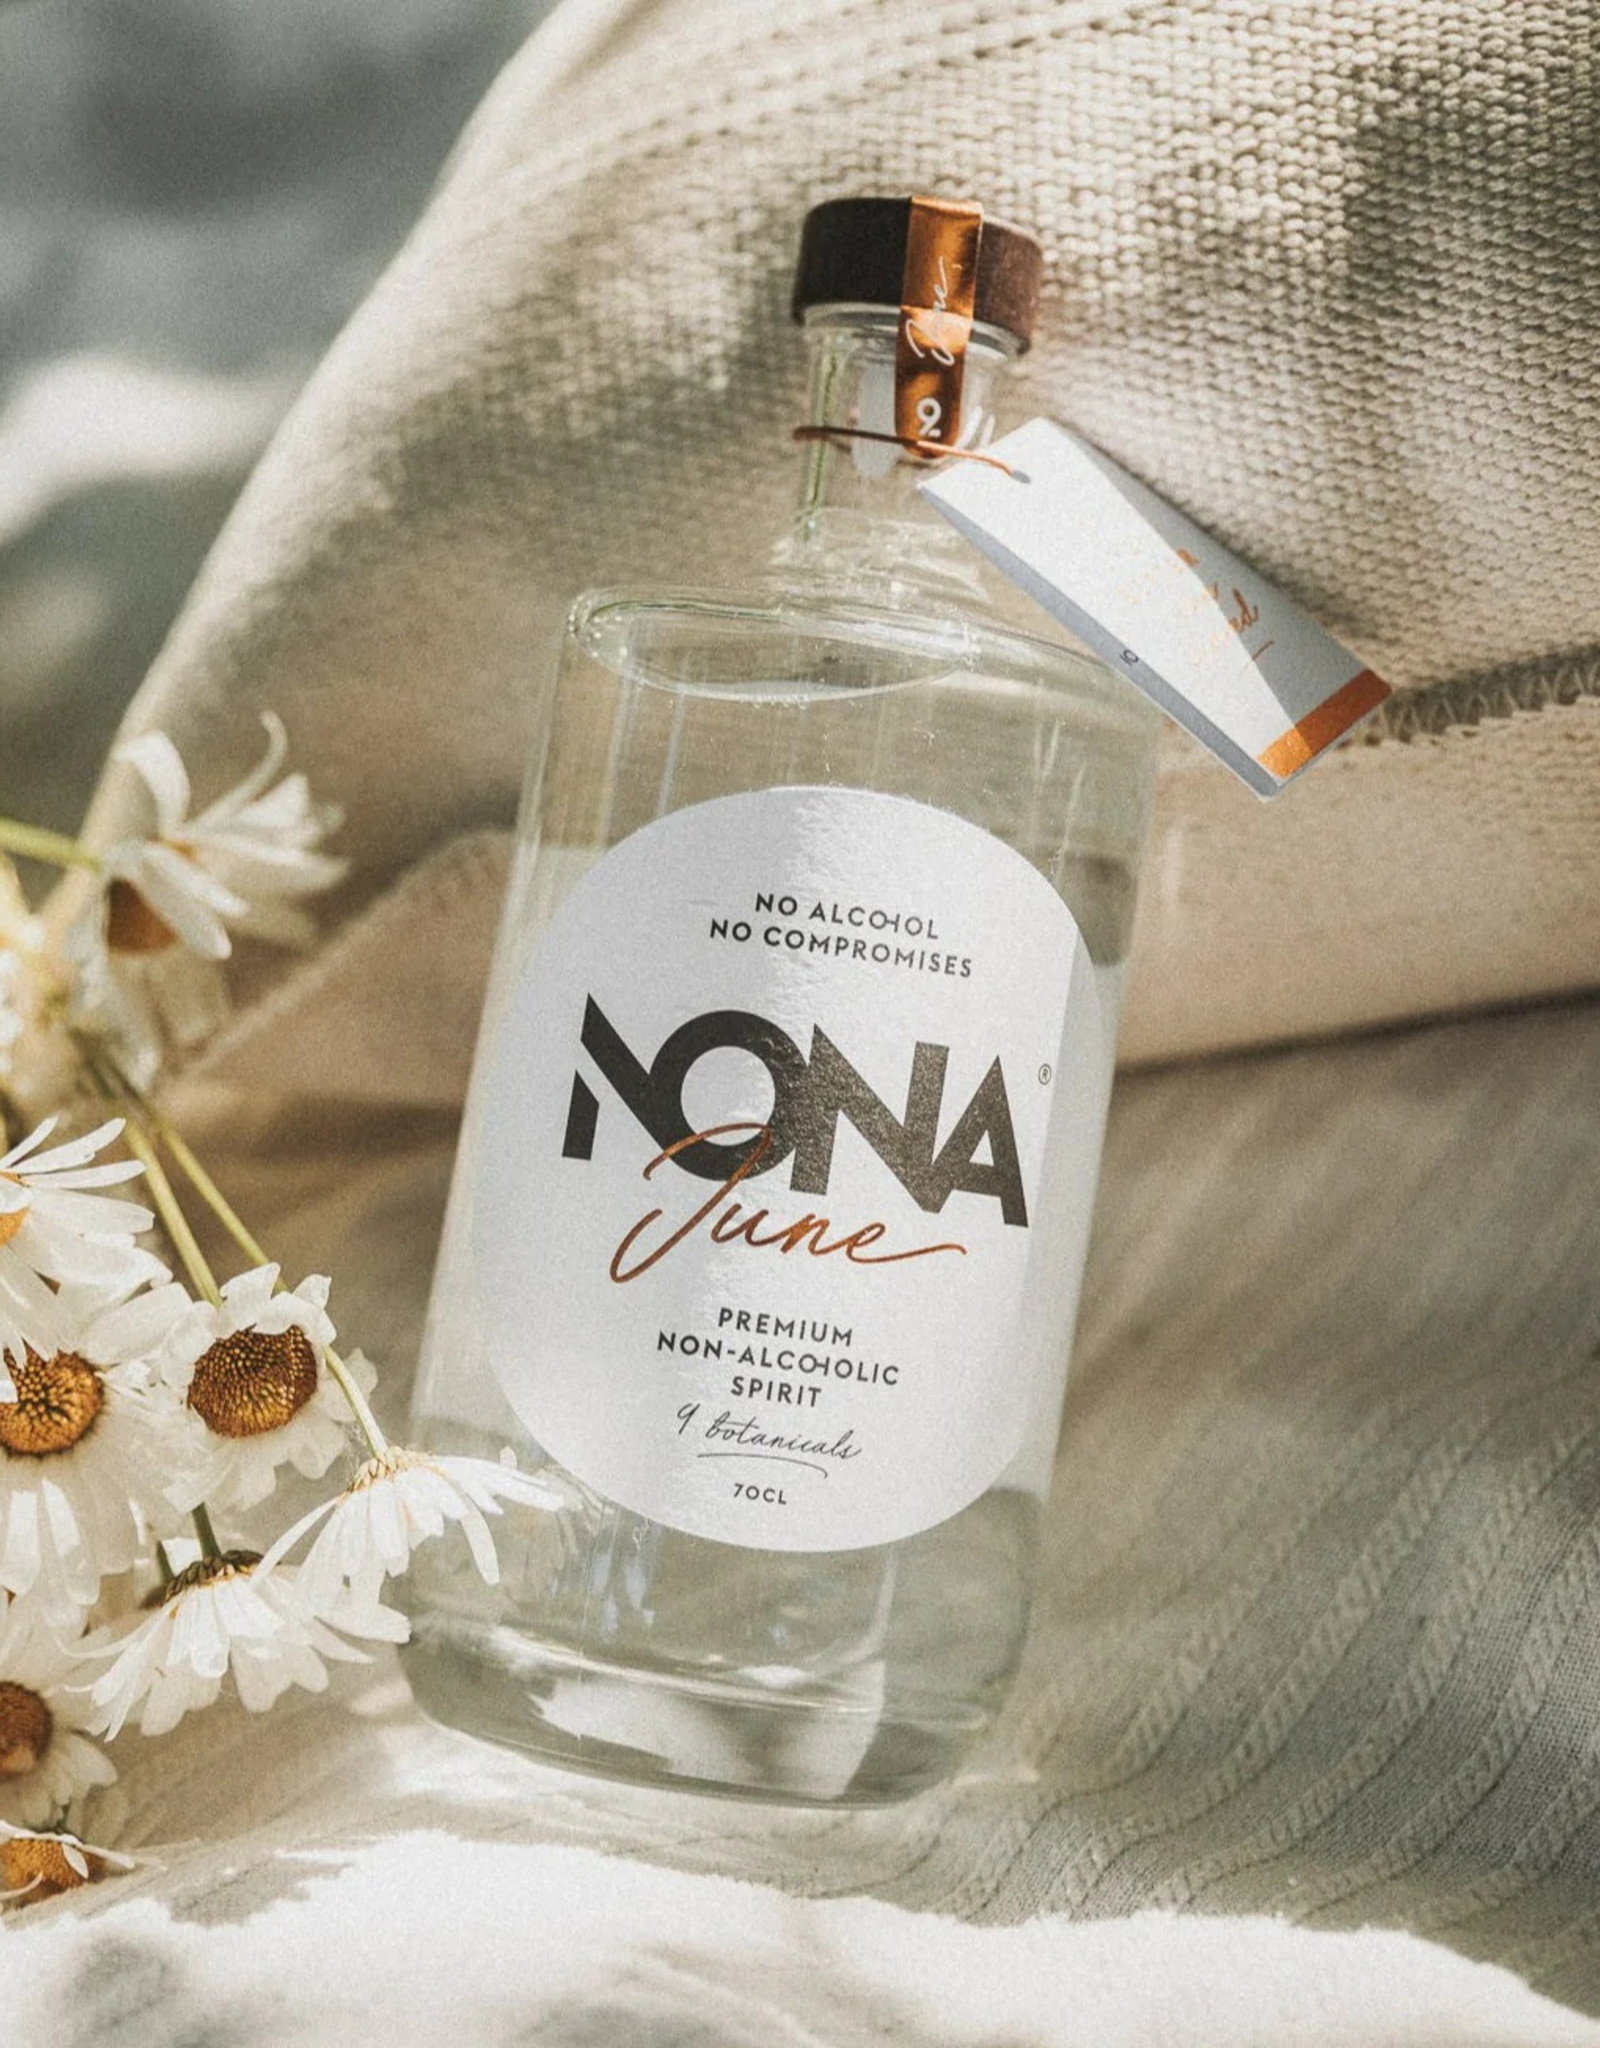 Nona Drinks NONA June 70cl alcoholvrij-herbs/citrus/basil